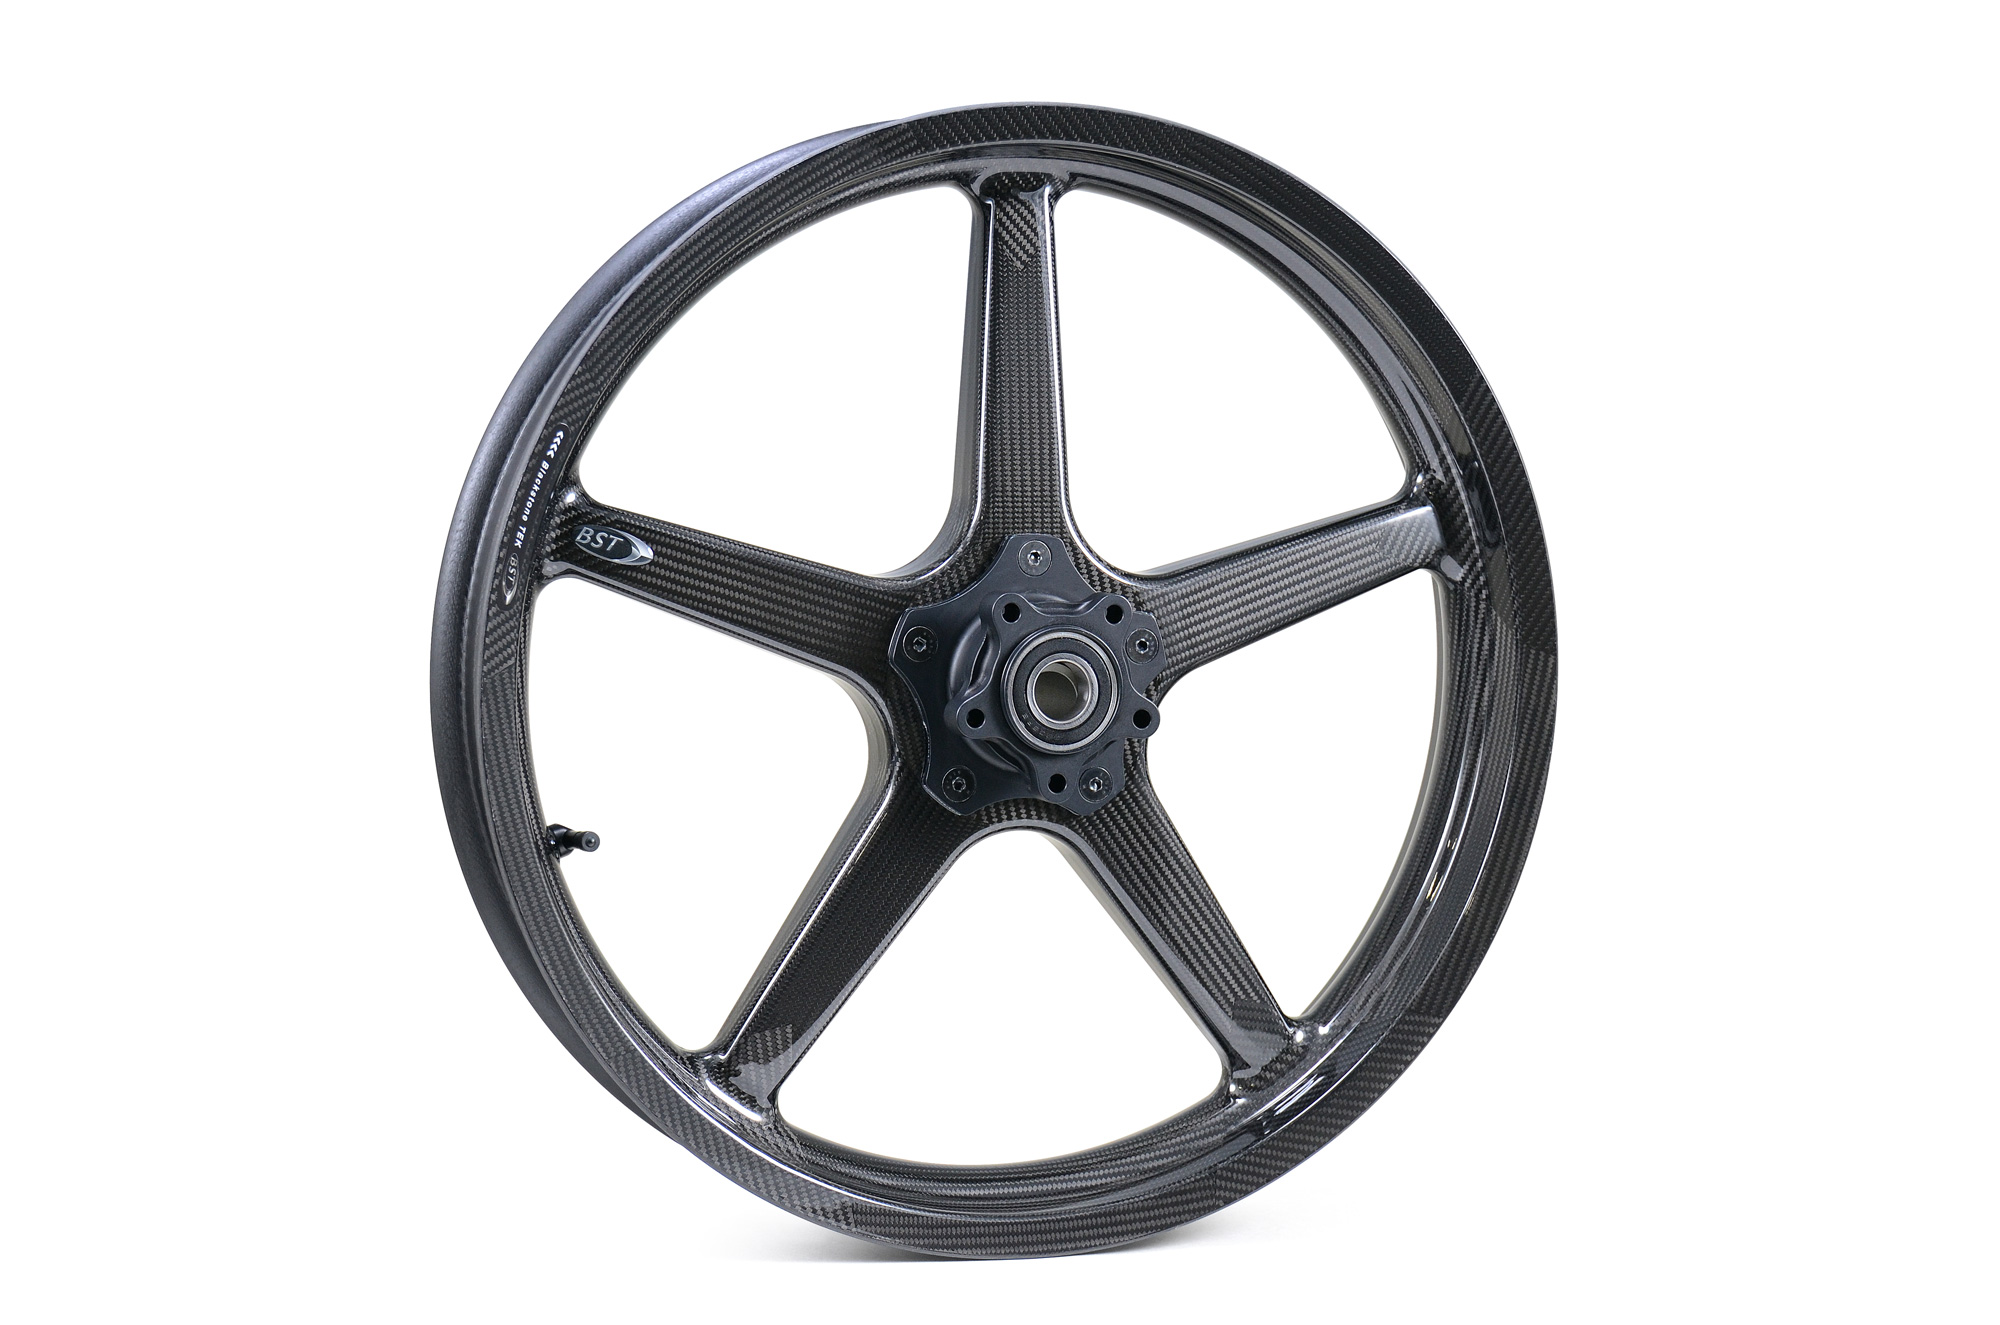 Buy BST Twin TEK 19 x 3.0 Front Wheel - Indian FTR 1200 (19-20) SKU: 172120 at the price of US$ 2350 | BrocksPerformance.com